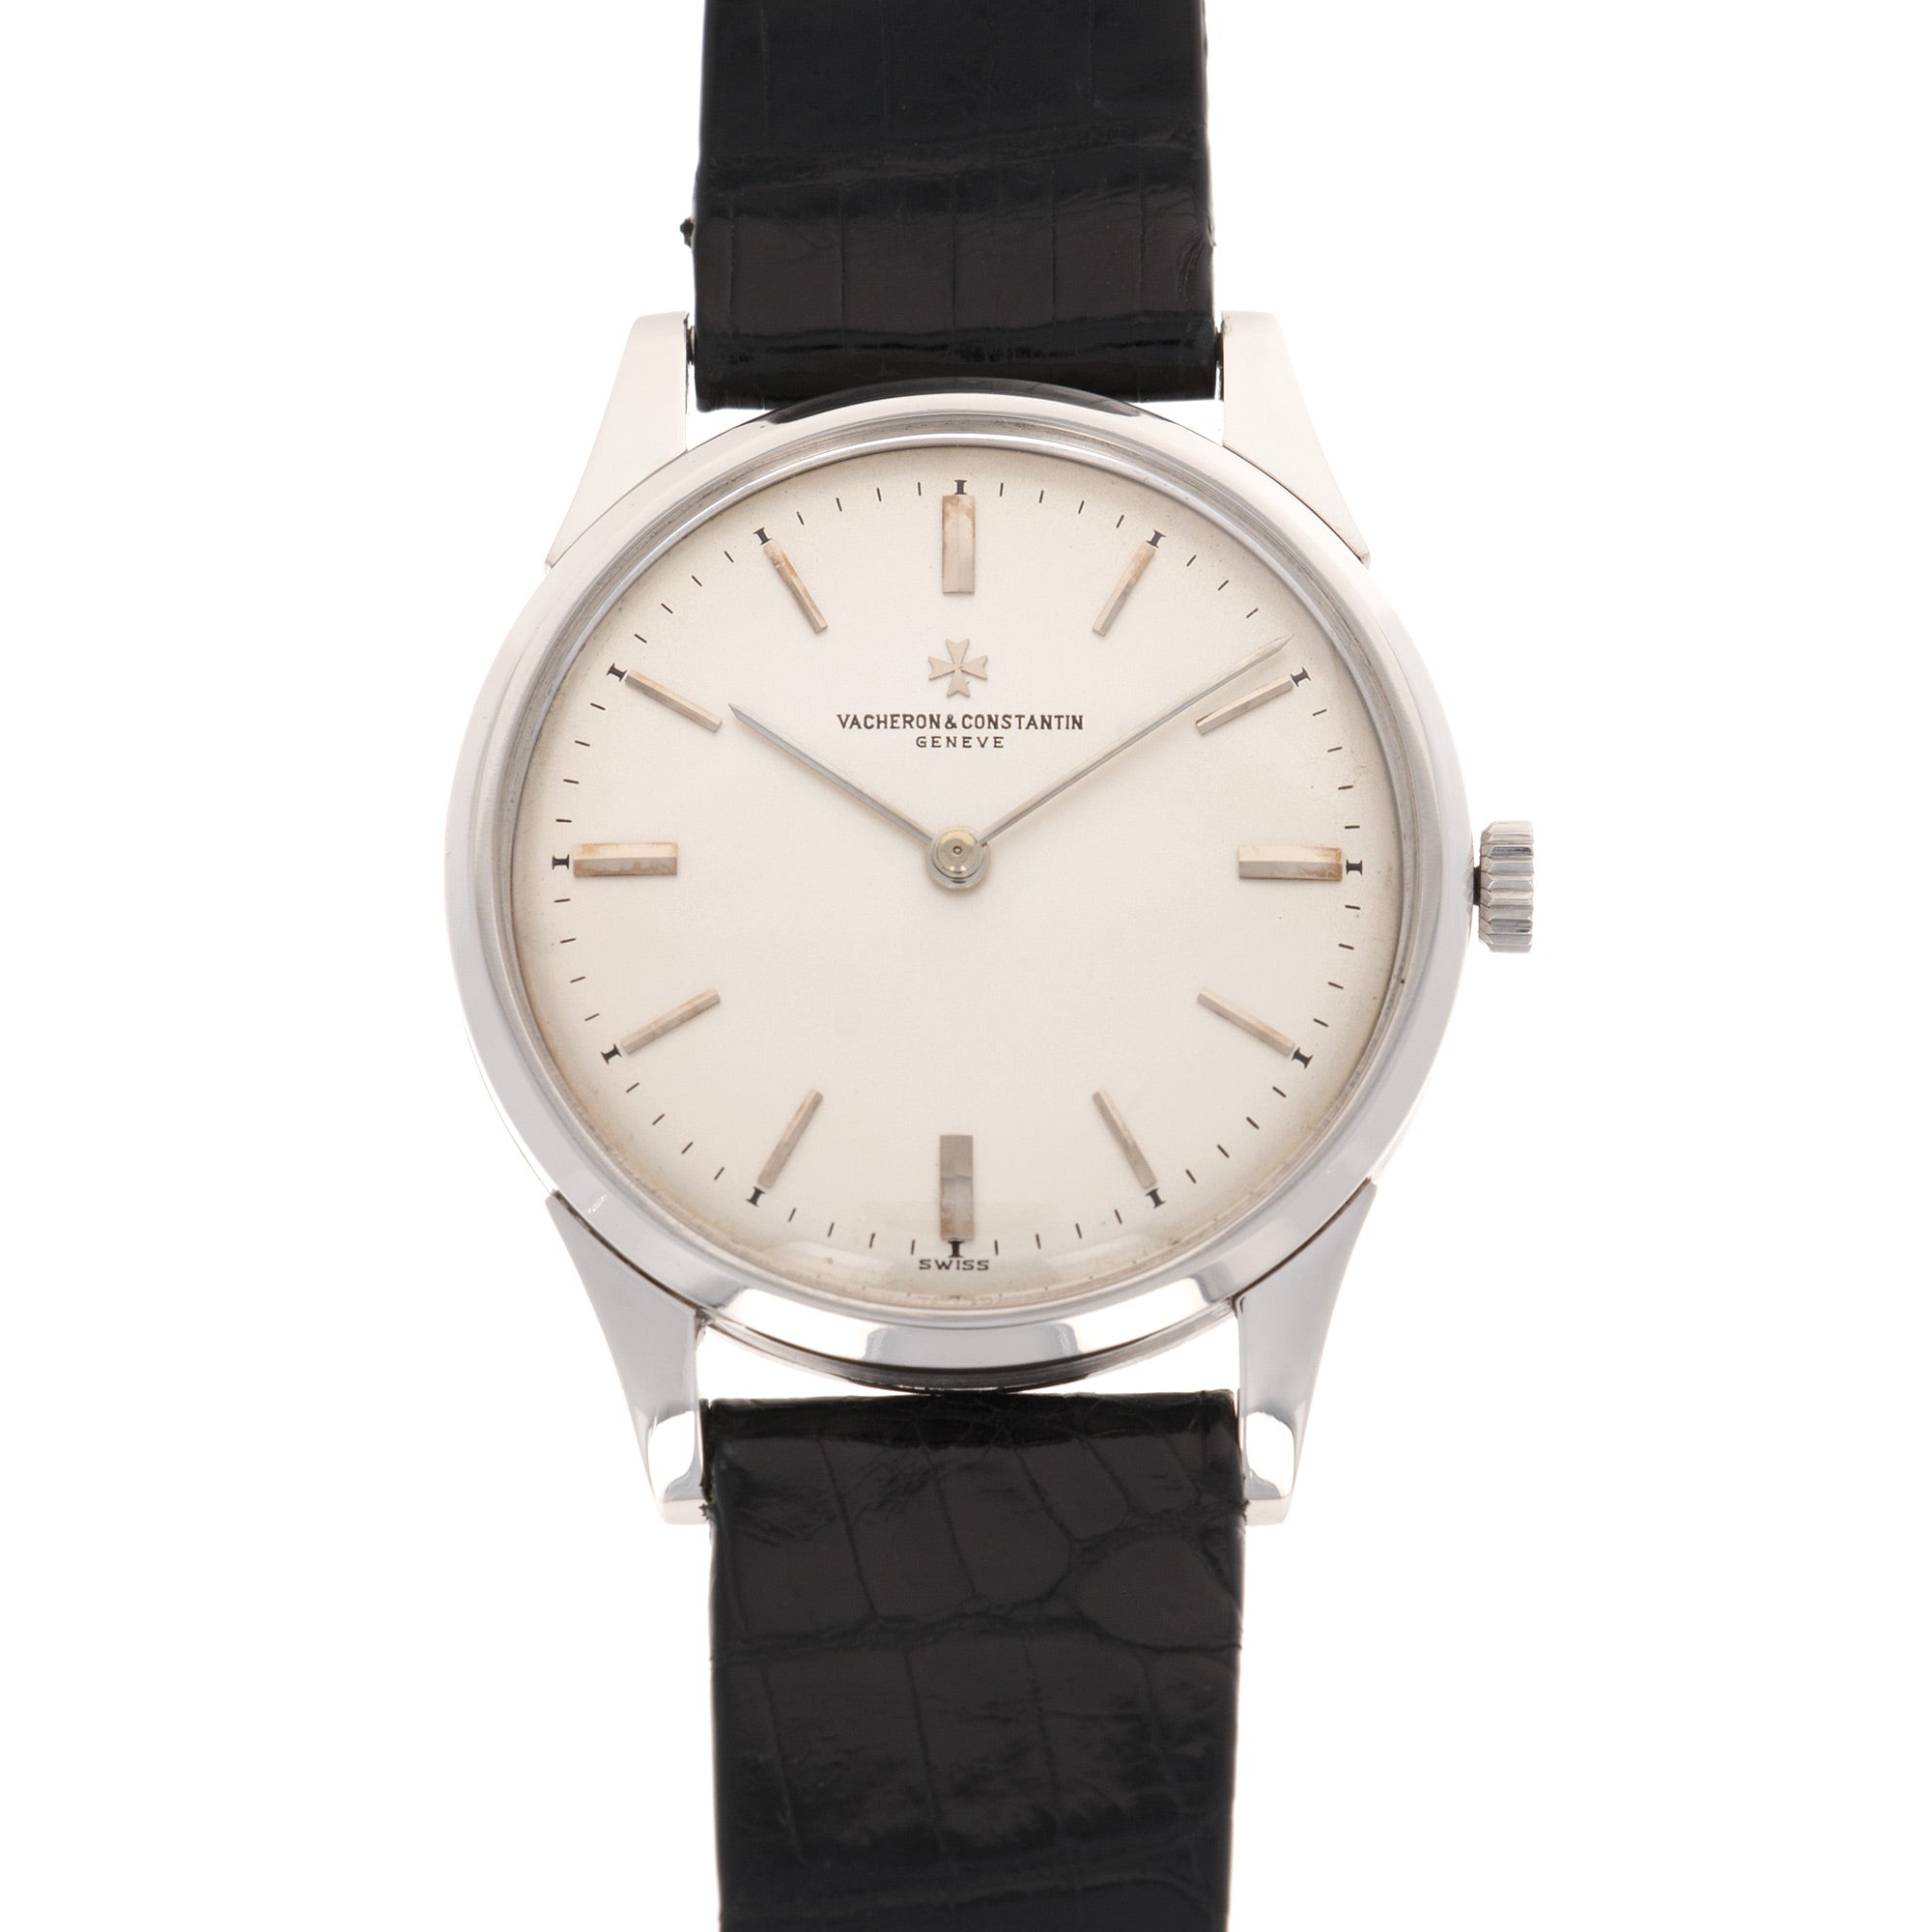 Vacheron Constantin - Vacheron Constantin Platinum Oversized Strap Watch - The Keystone Watches